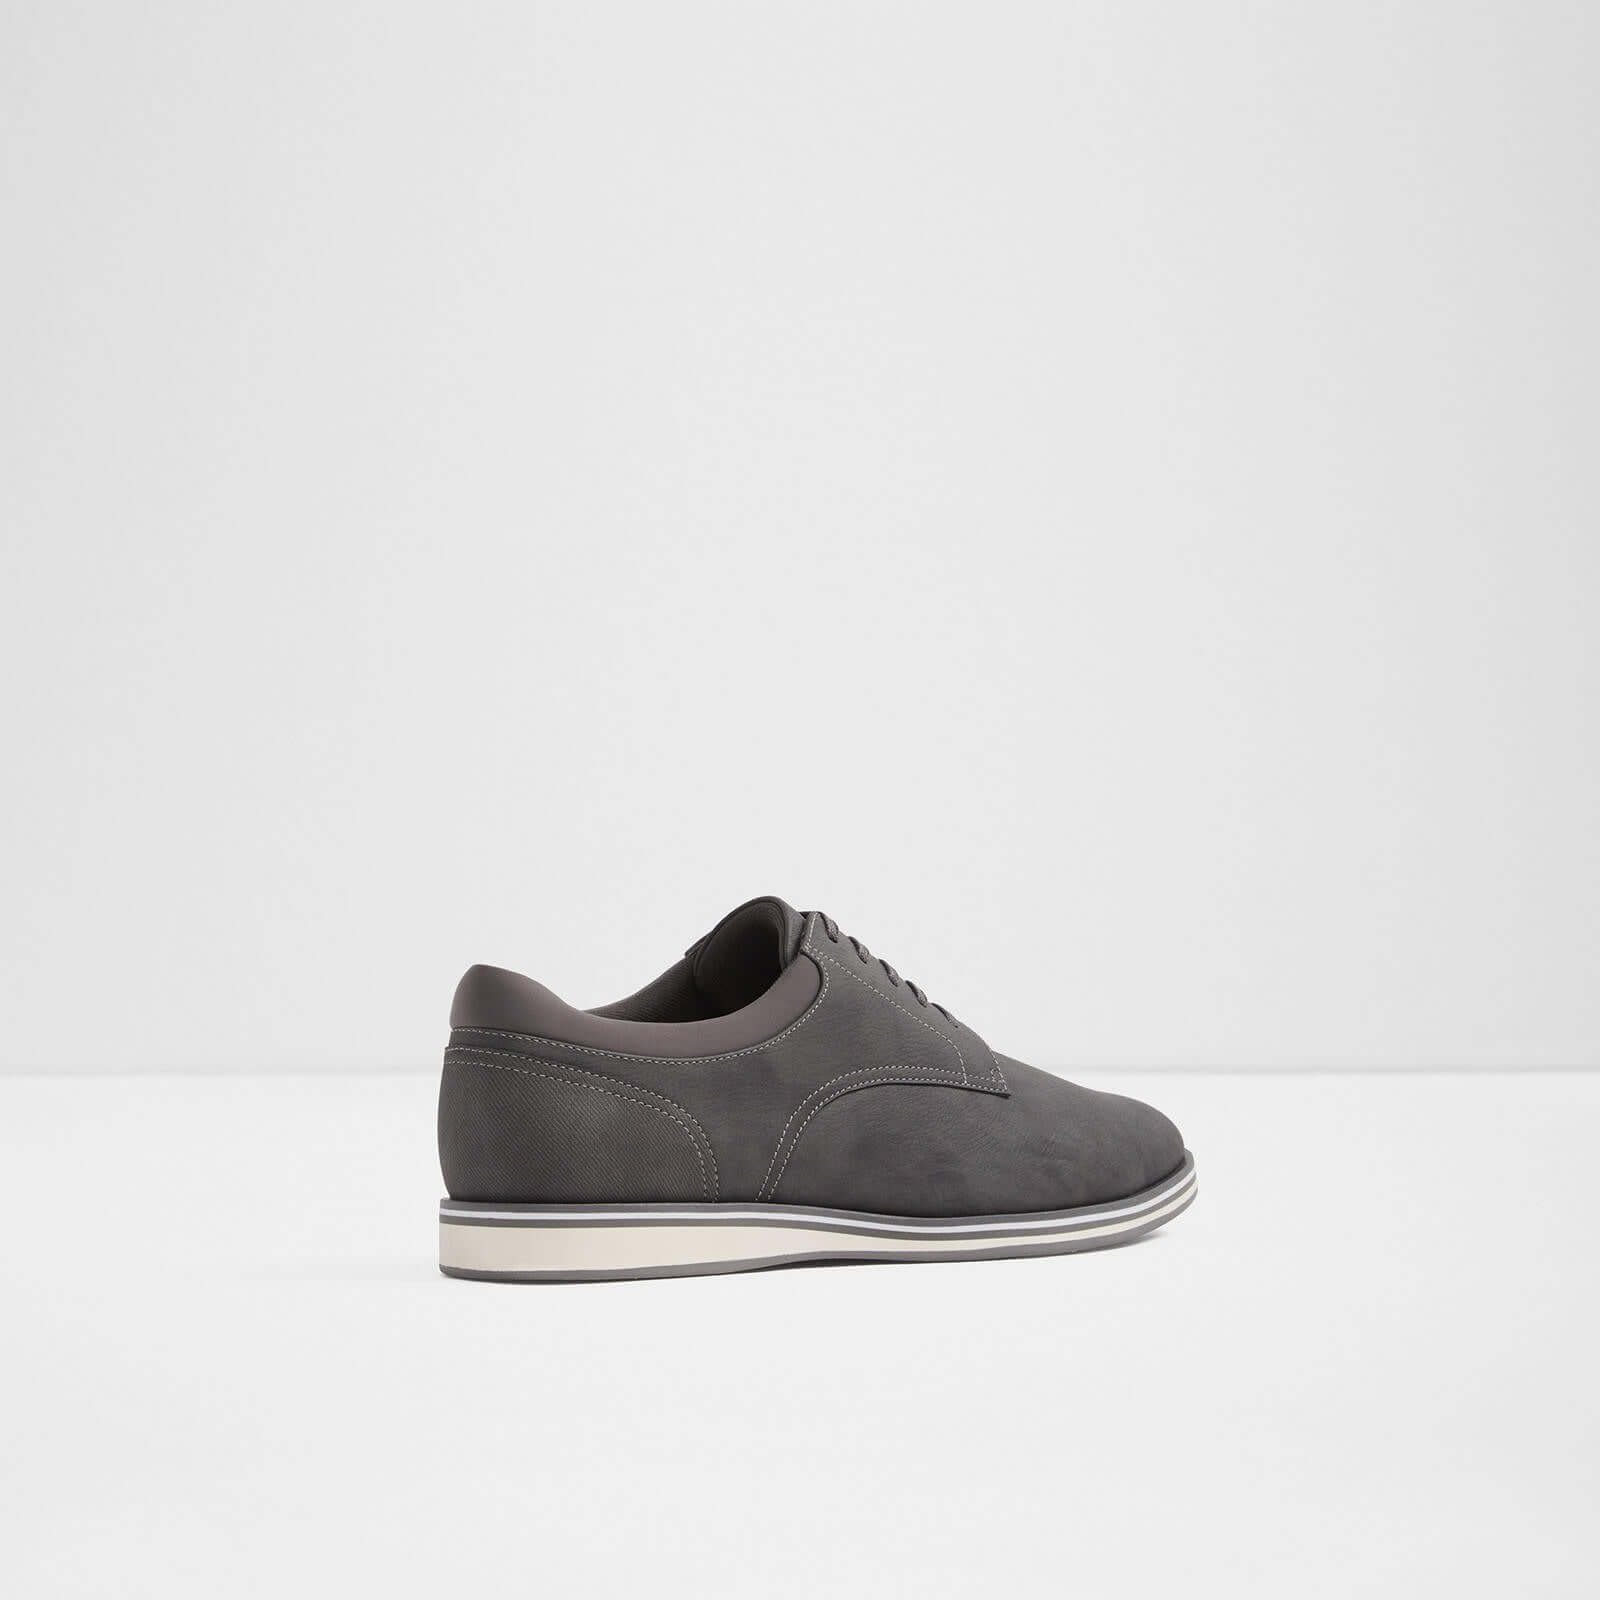 Aldo Men's Lace Up (Dark Grey) Shoes UK